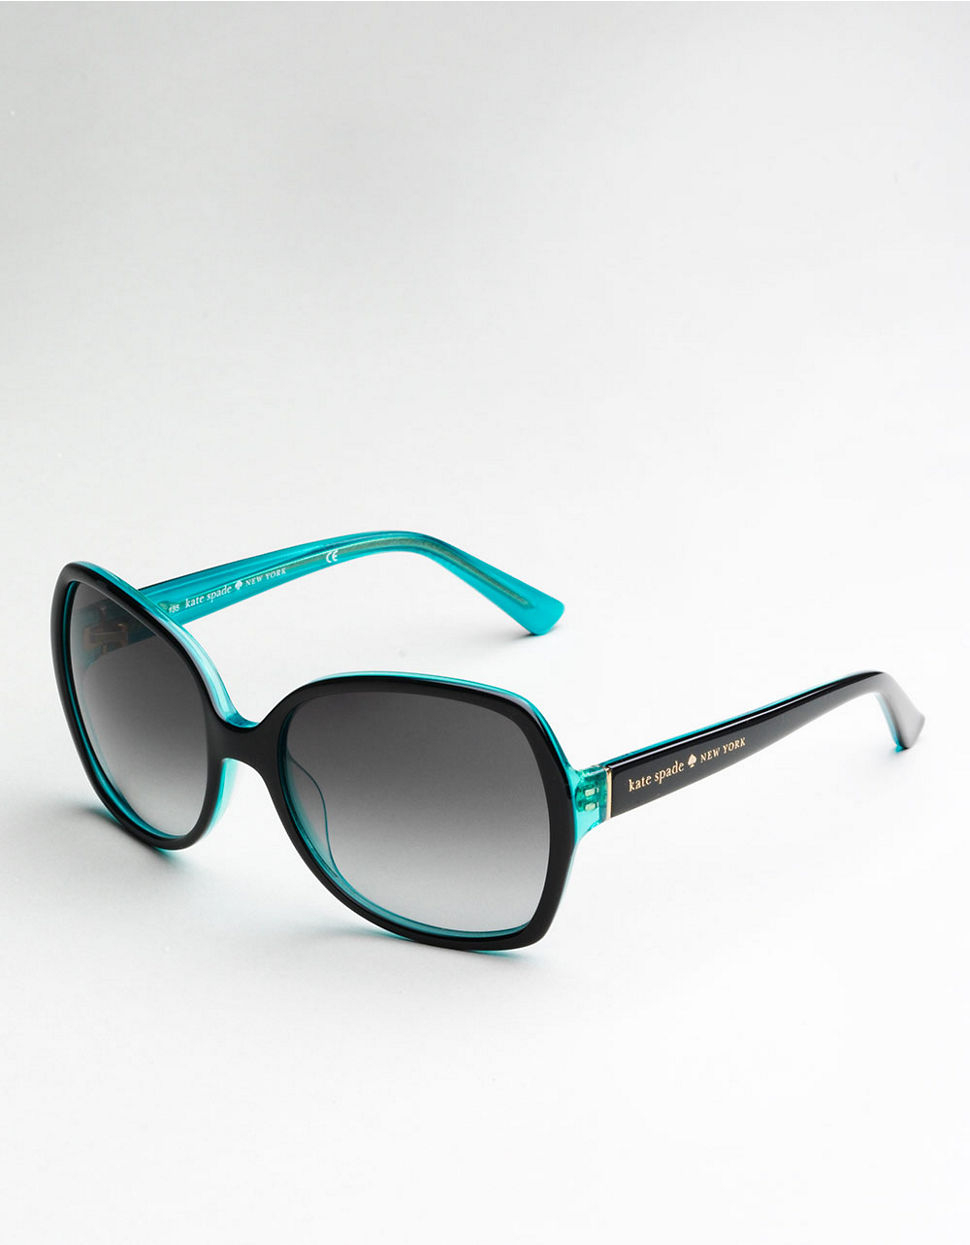 Kate spade Halsey Square Sunglasses in Blue (Black Aqua) | Lyst